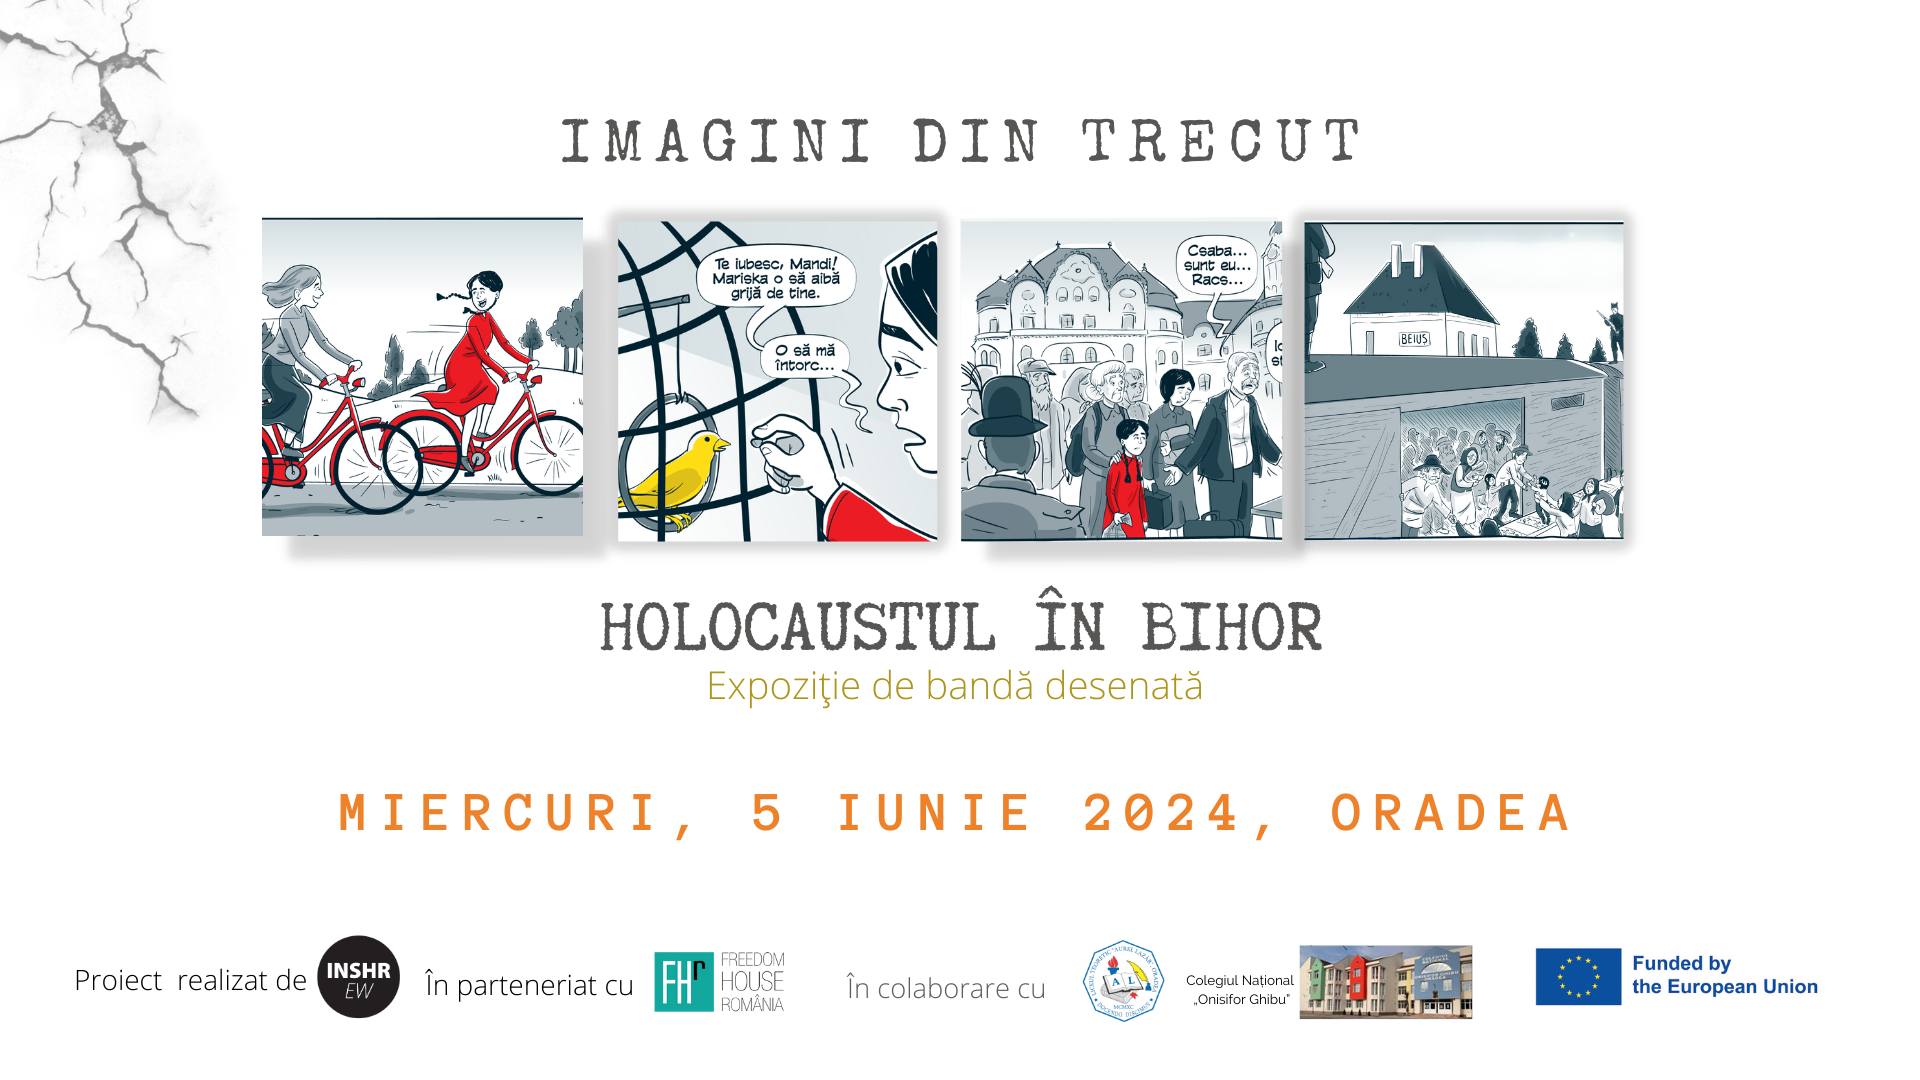 Holocaustul din Bihor